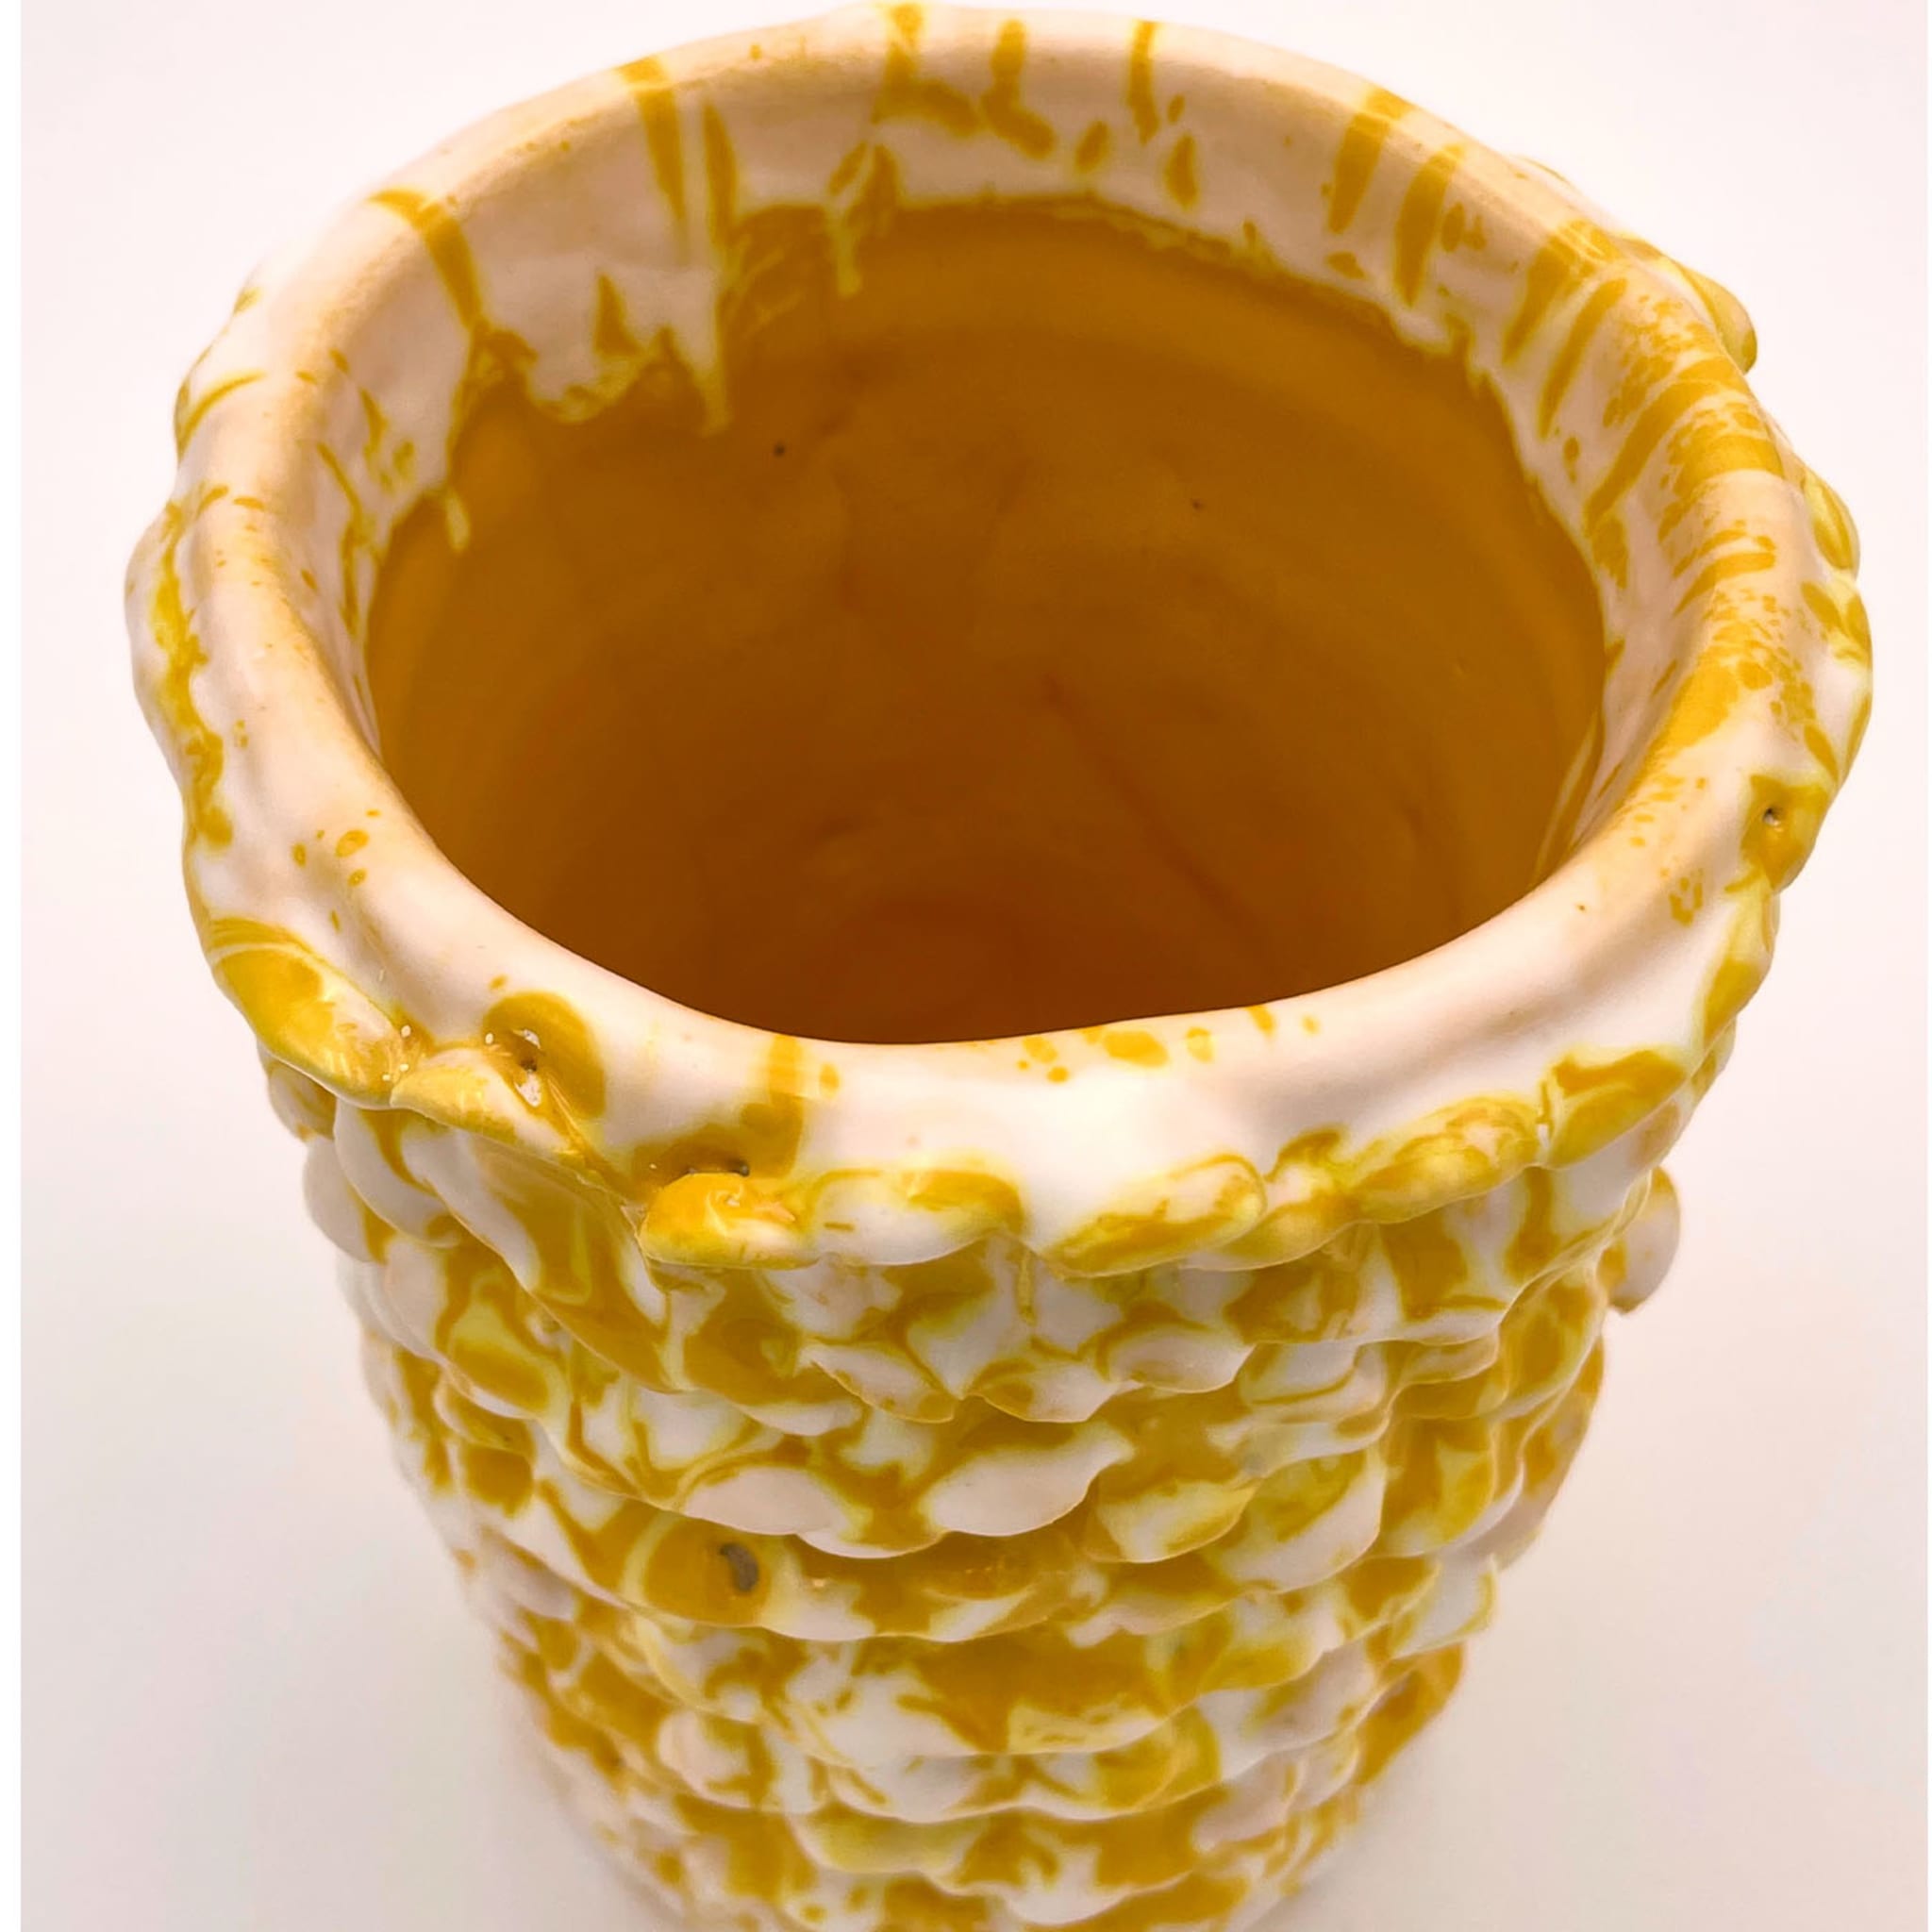 Onda Small Sunflower Yellow and Matte White Vase - Alternative view 3